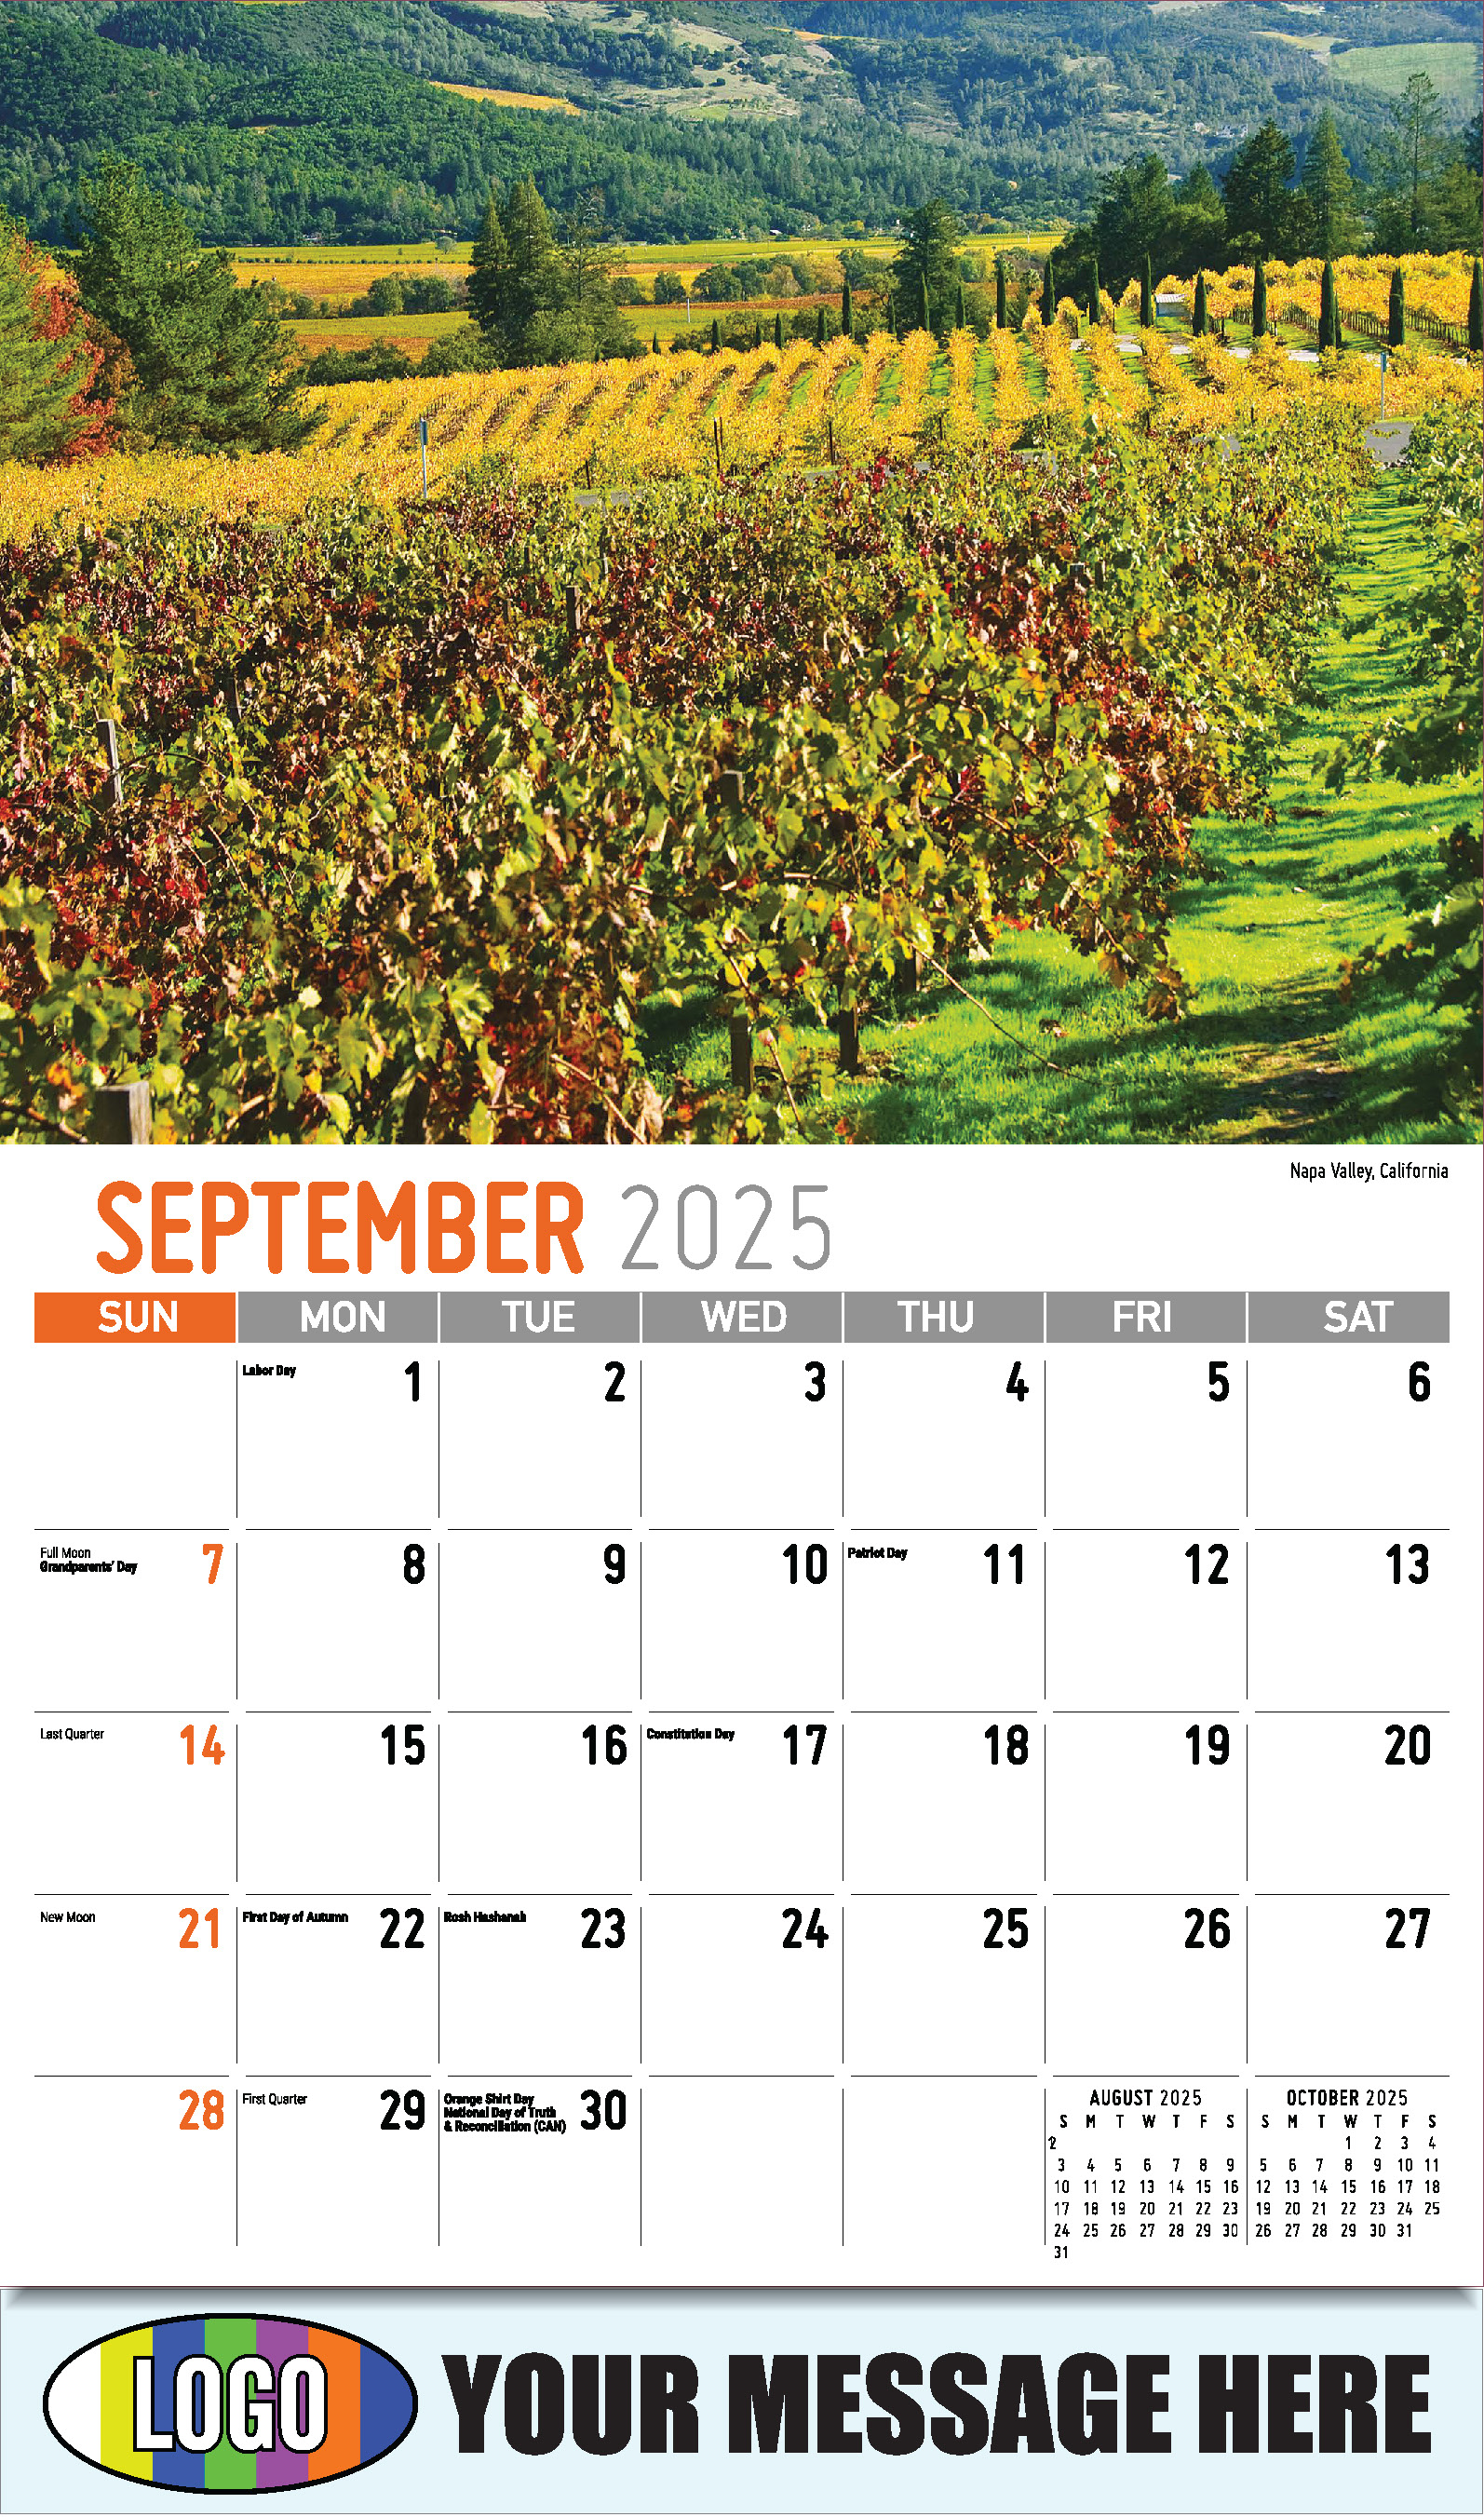 Scenes of America 2025 Business Advertising Wall Calendar - September